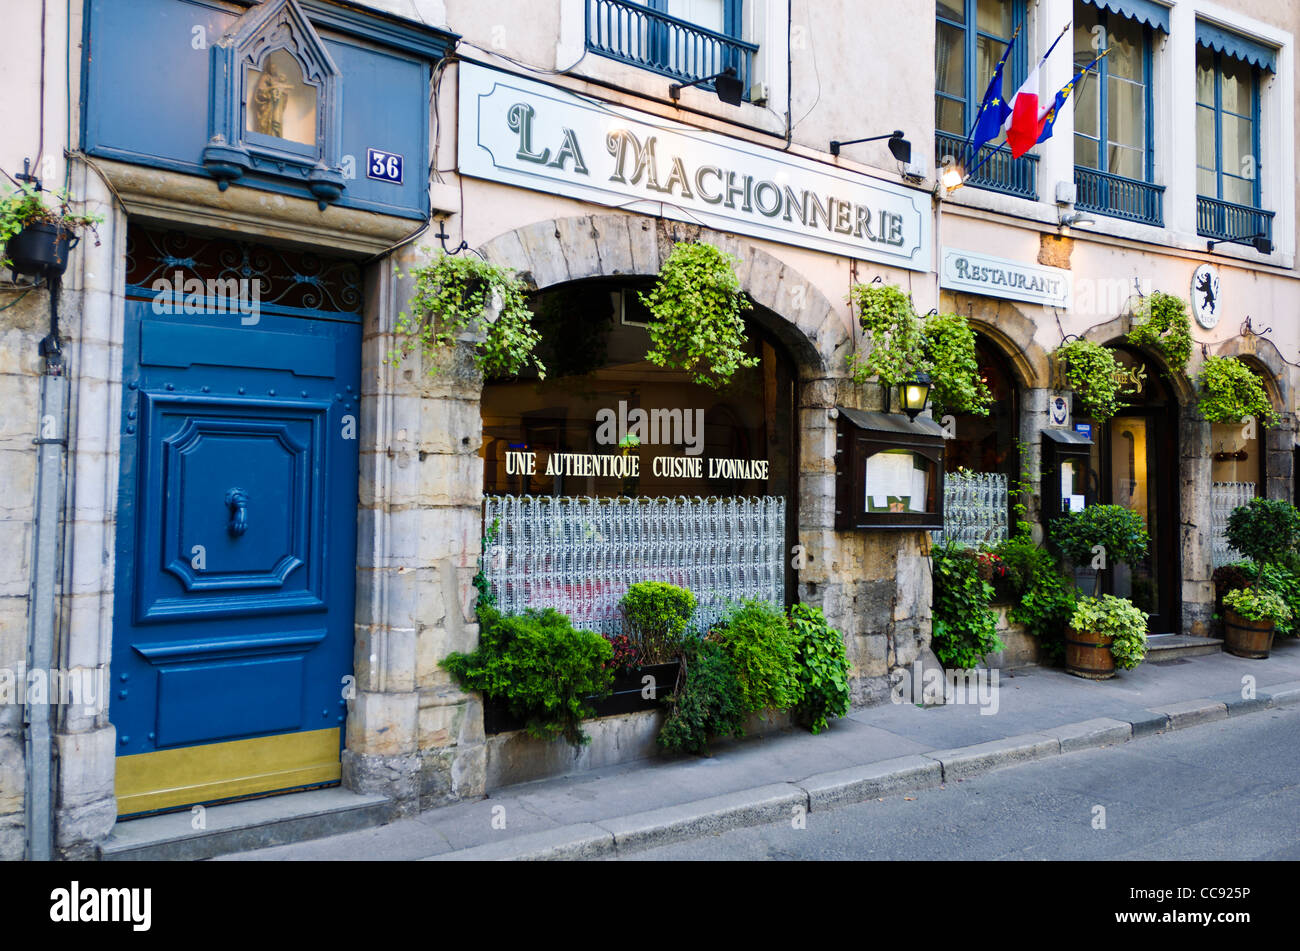 La Machonnerie Restaurant in old town Vieux Lyon, France (UNESCO World Heritage Site) Stock Photo